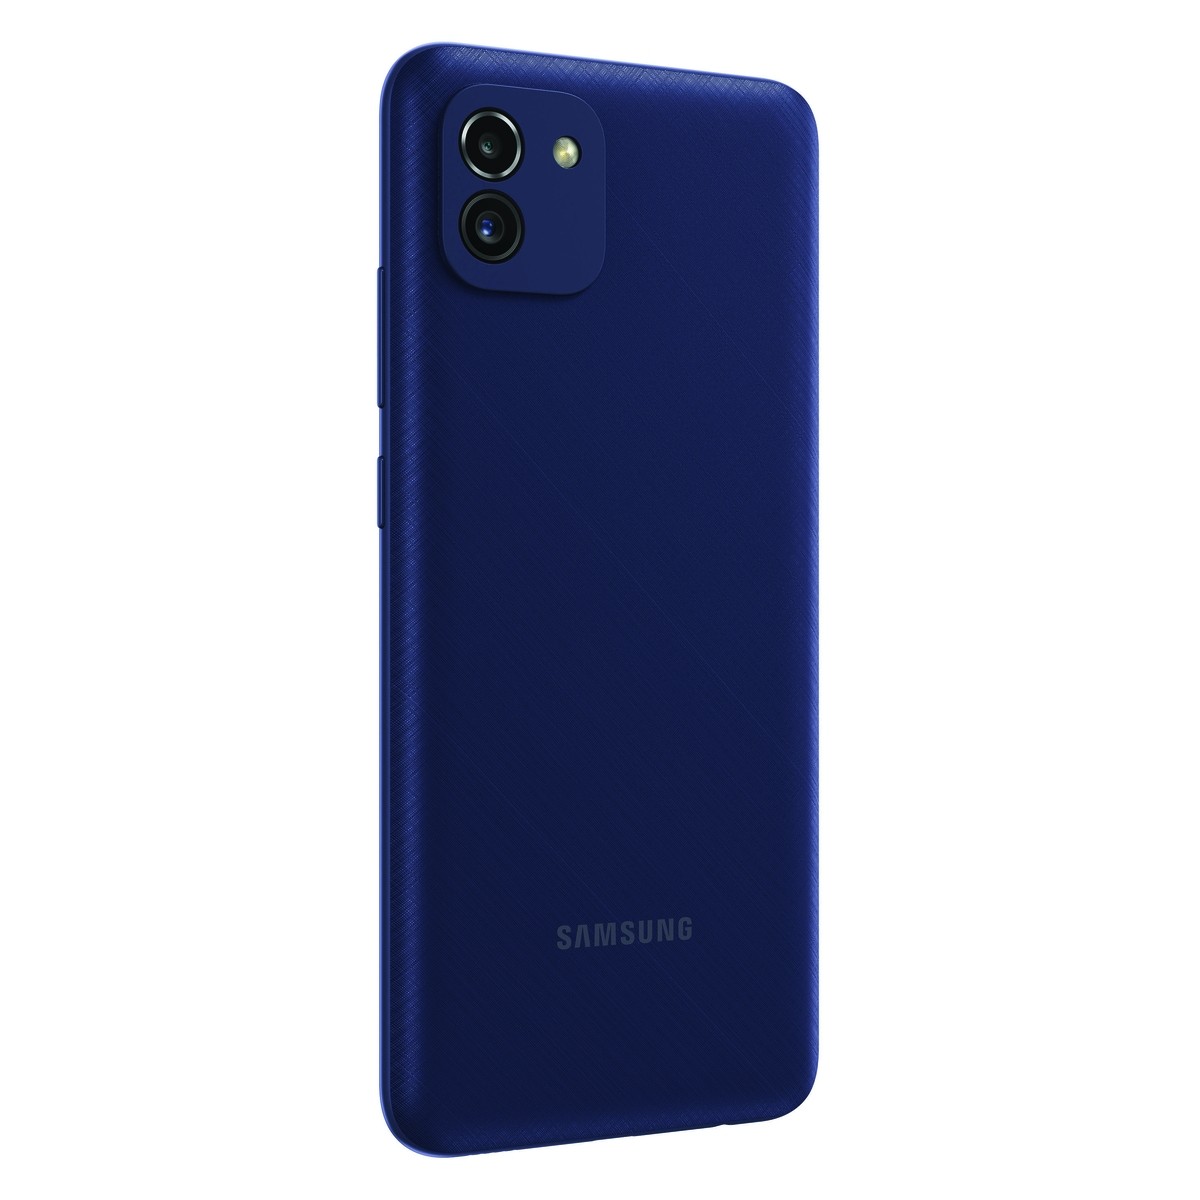 Samsung Galaxy A03 (Vodacom)